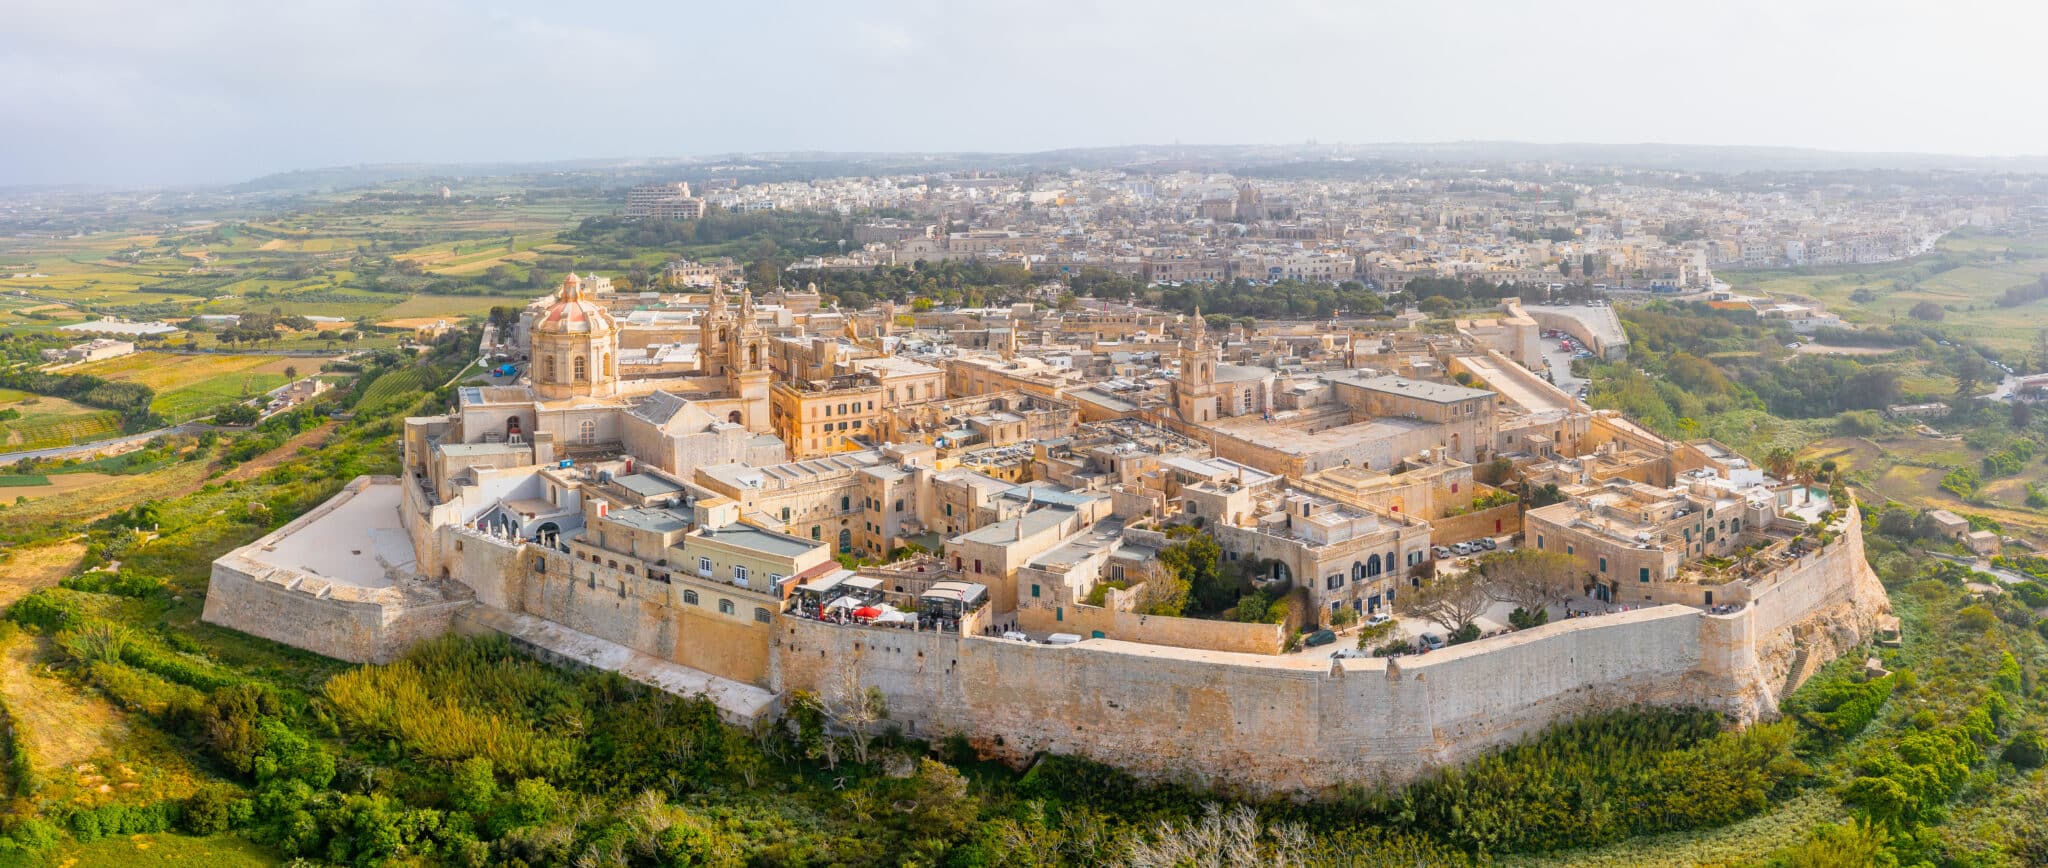 Forteresse de Mdina - Malte